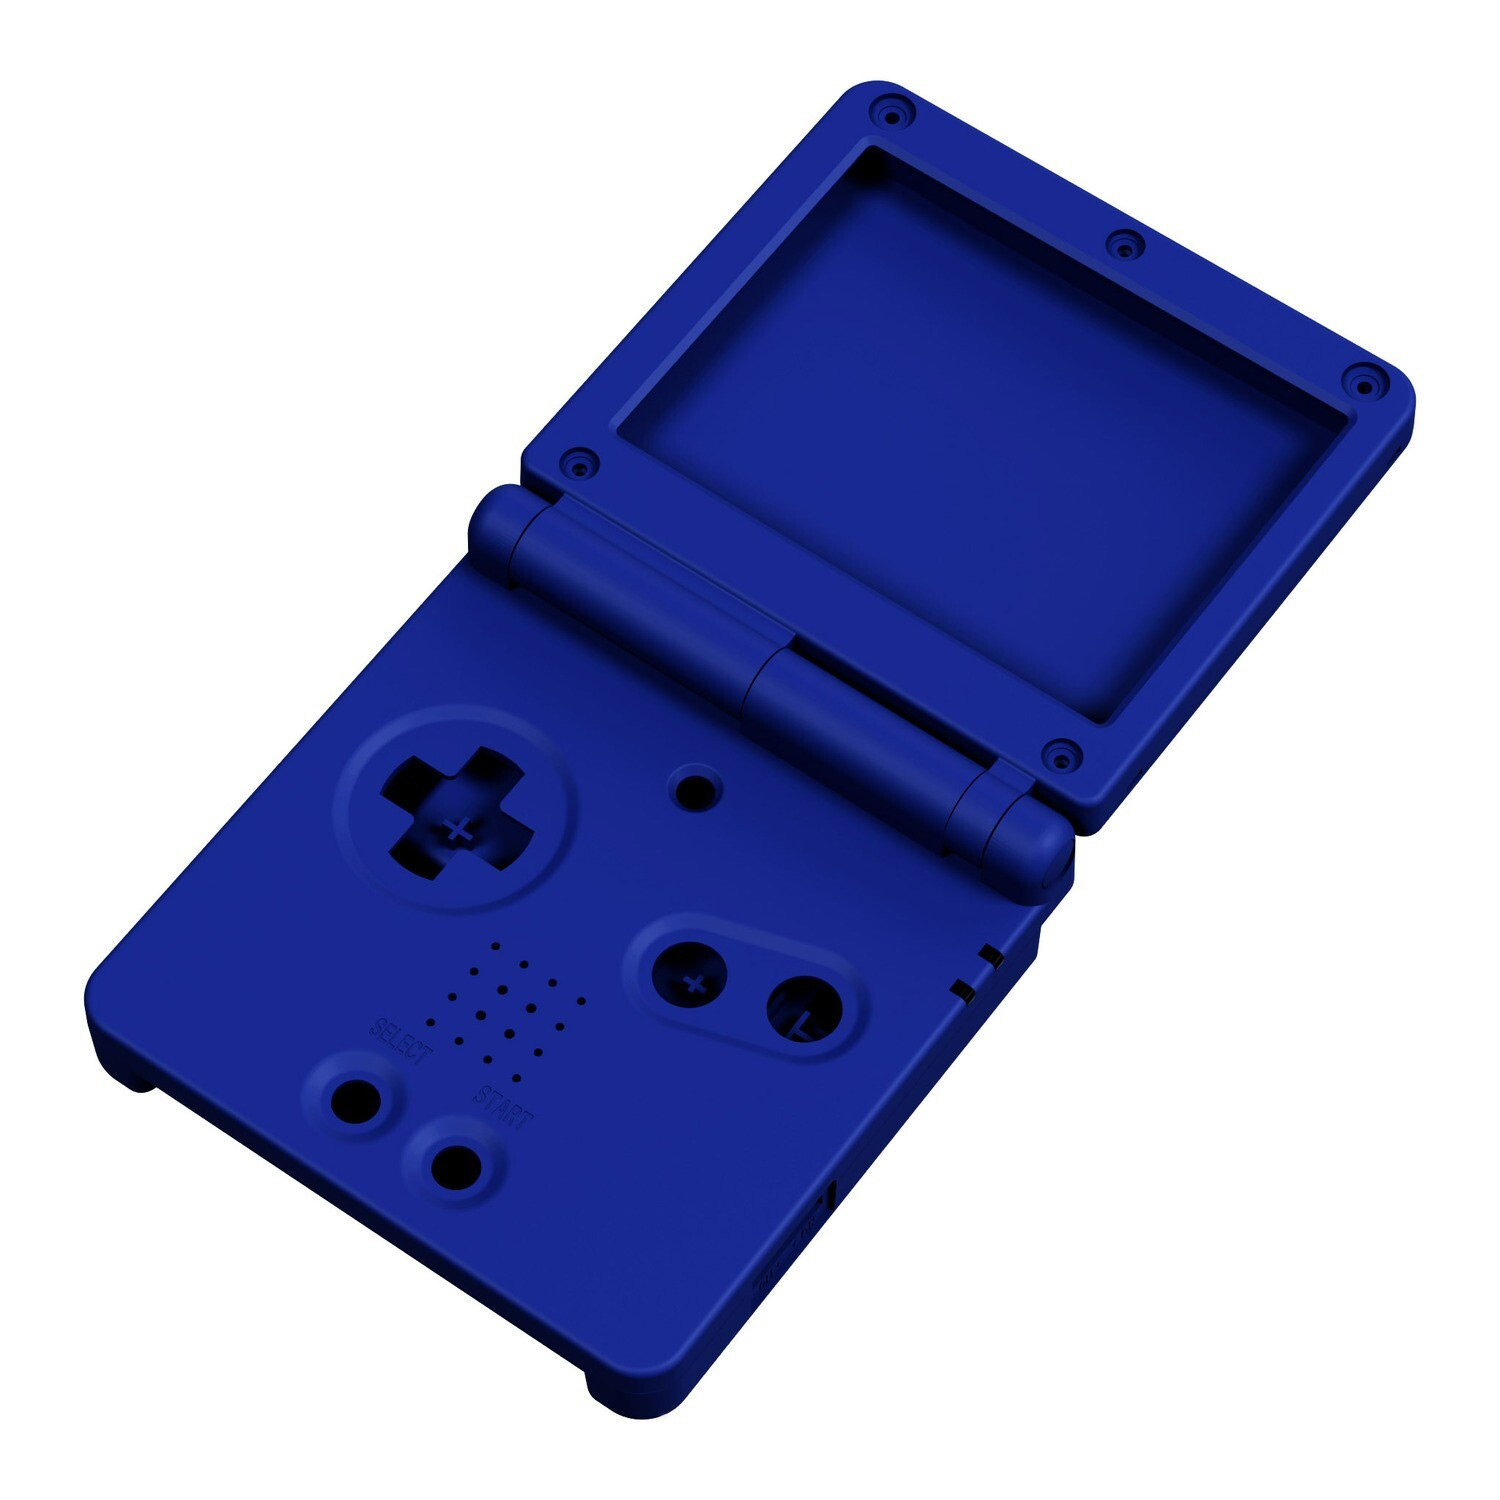 Game Boy Advance SP Etui (Stevig Blauw)